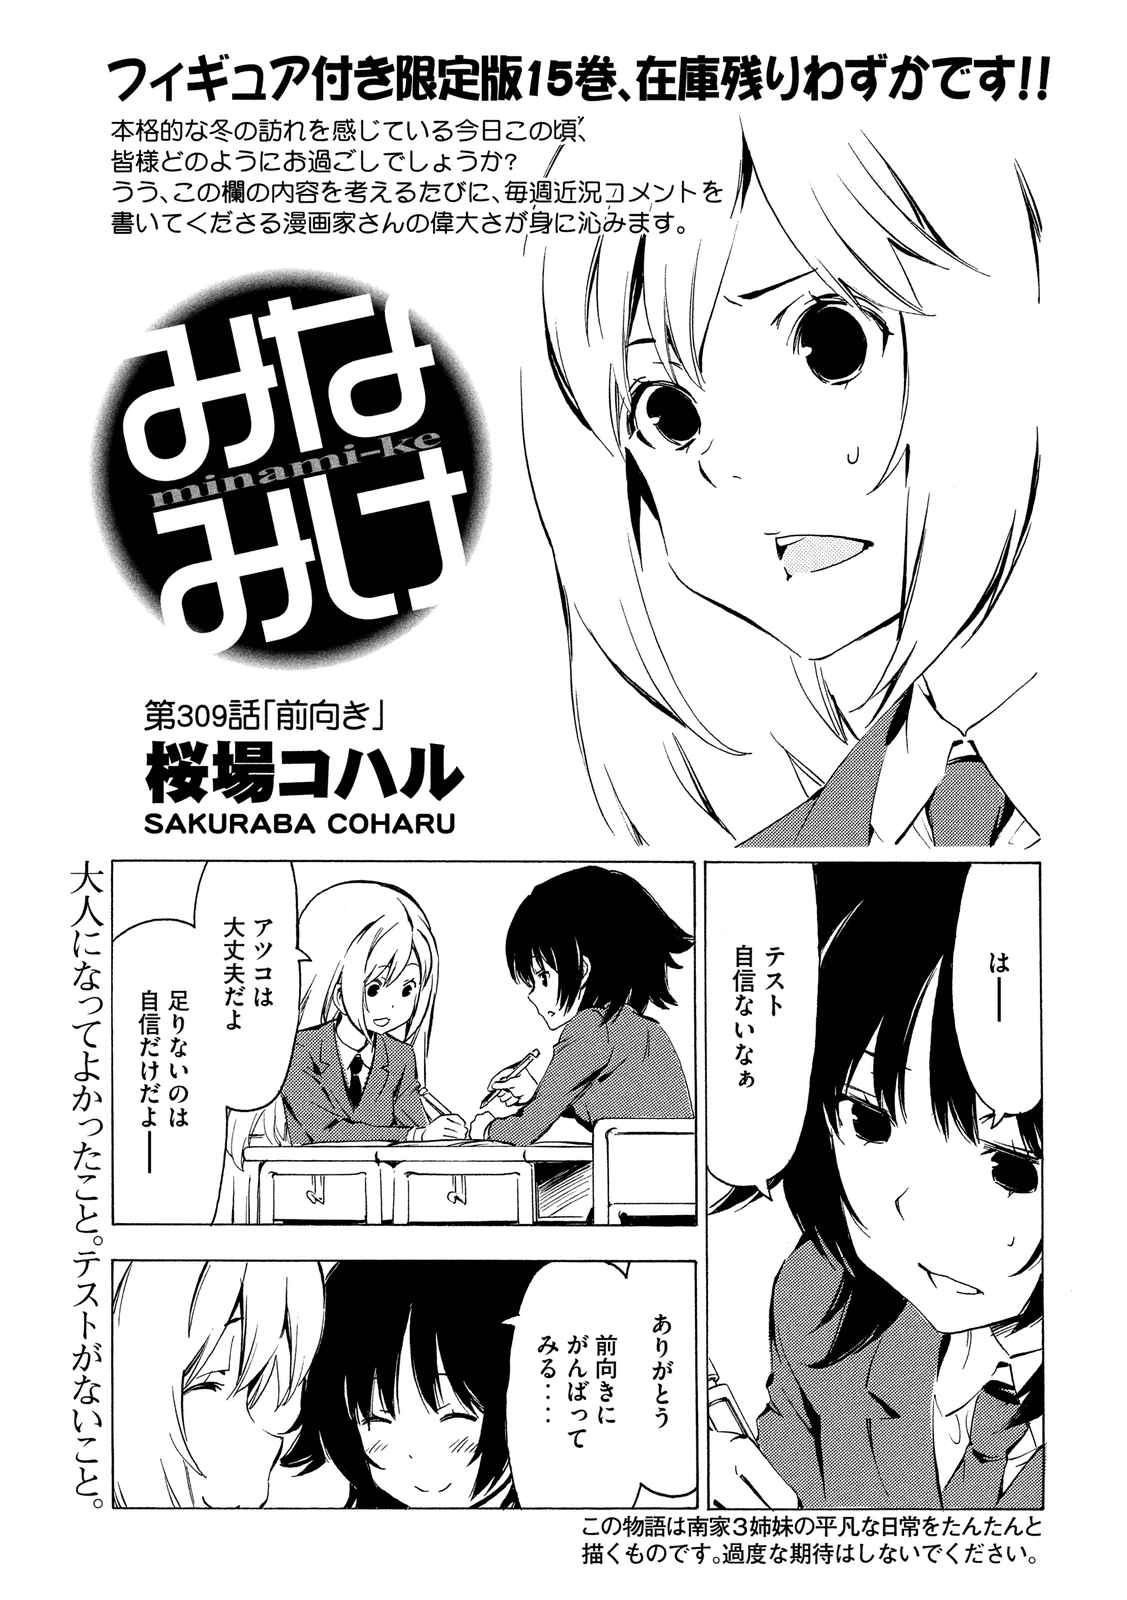 Minami-ke - Chapter 309 - Page 1